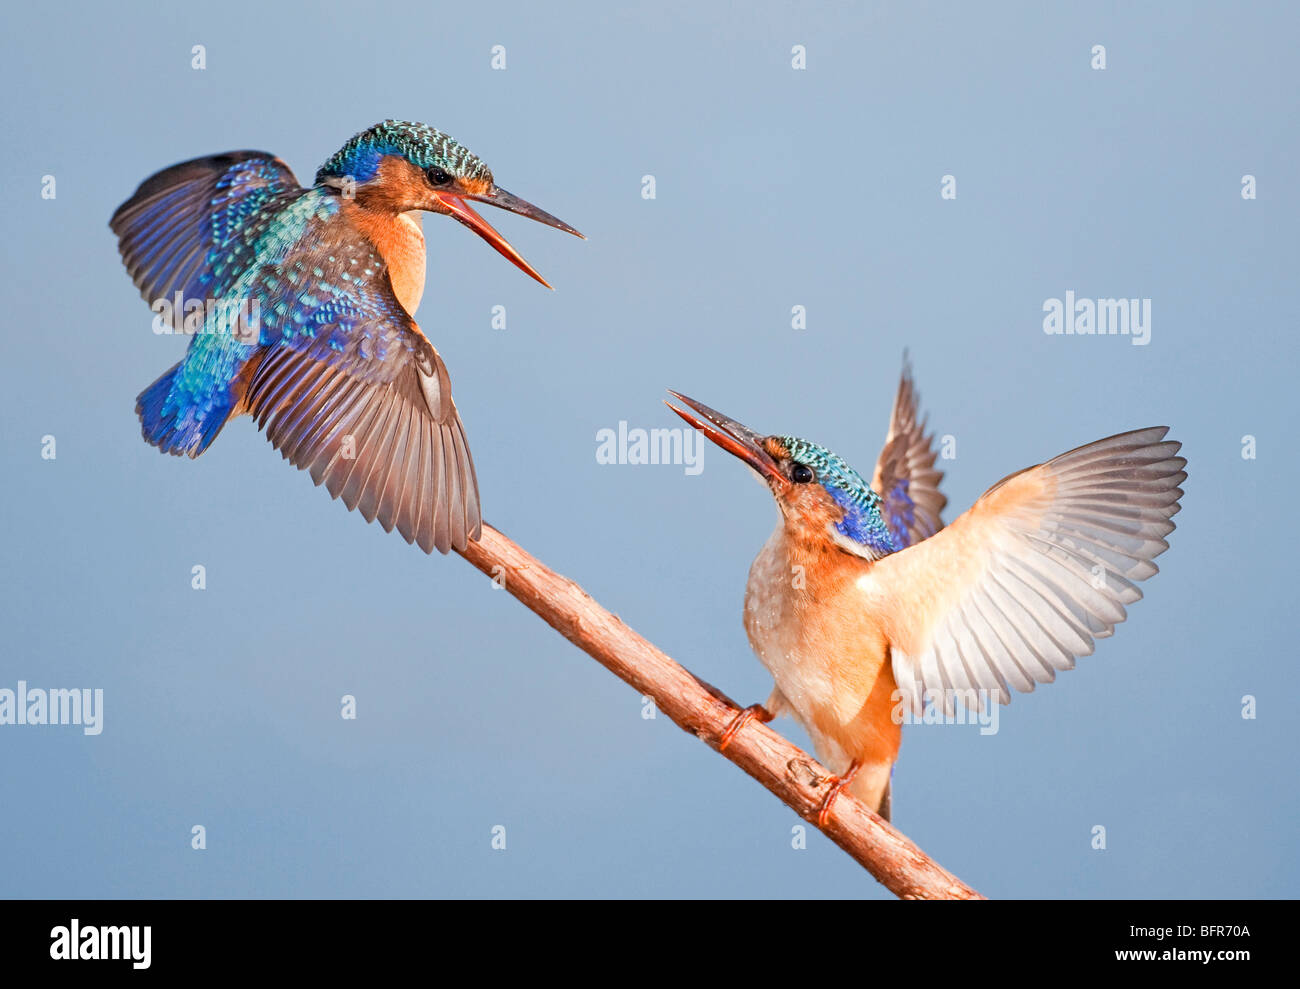 Malachite Kingfisher emparejar con alas planteadas interactuando en rama Foto de stock